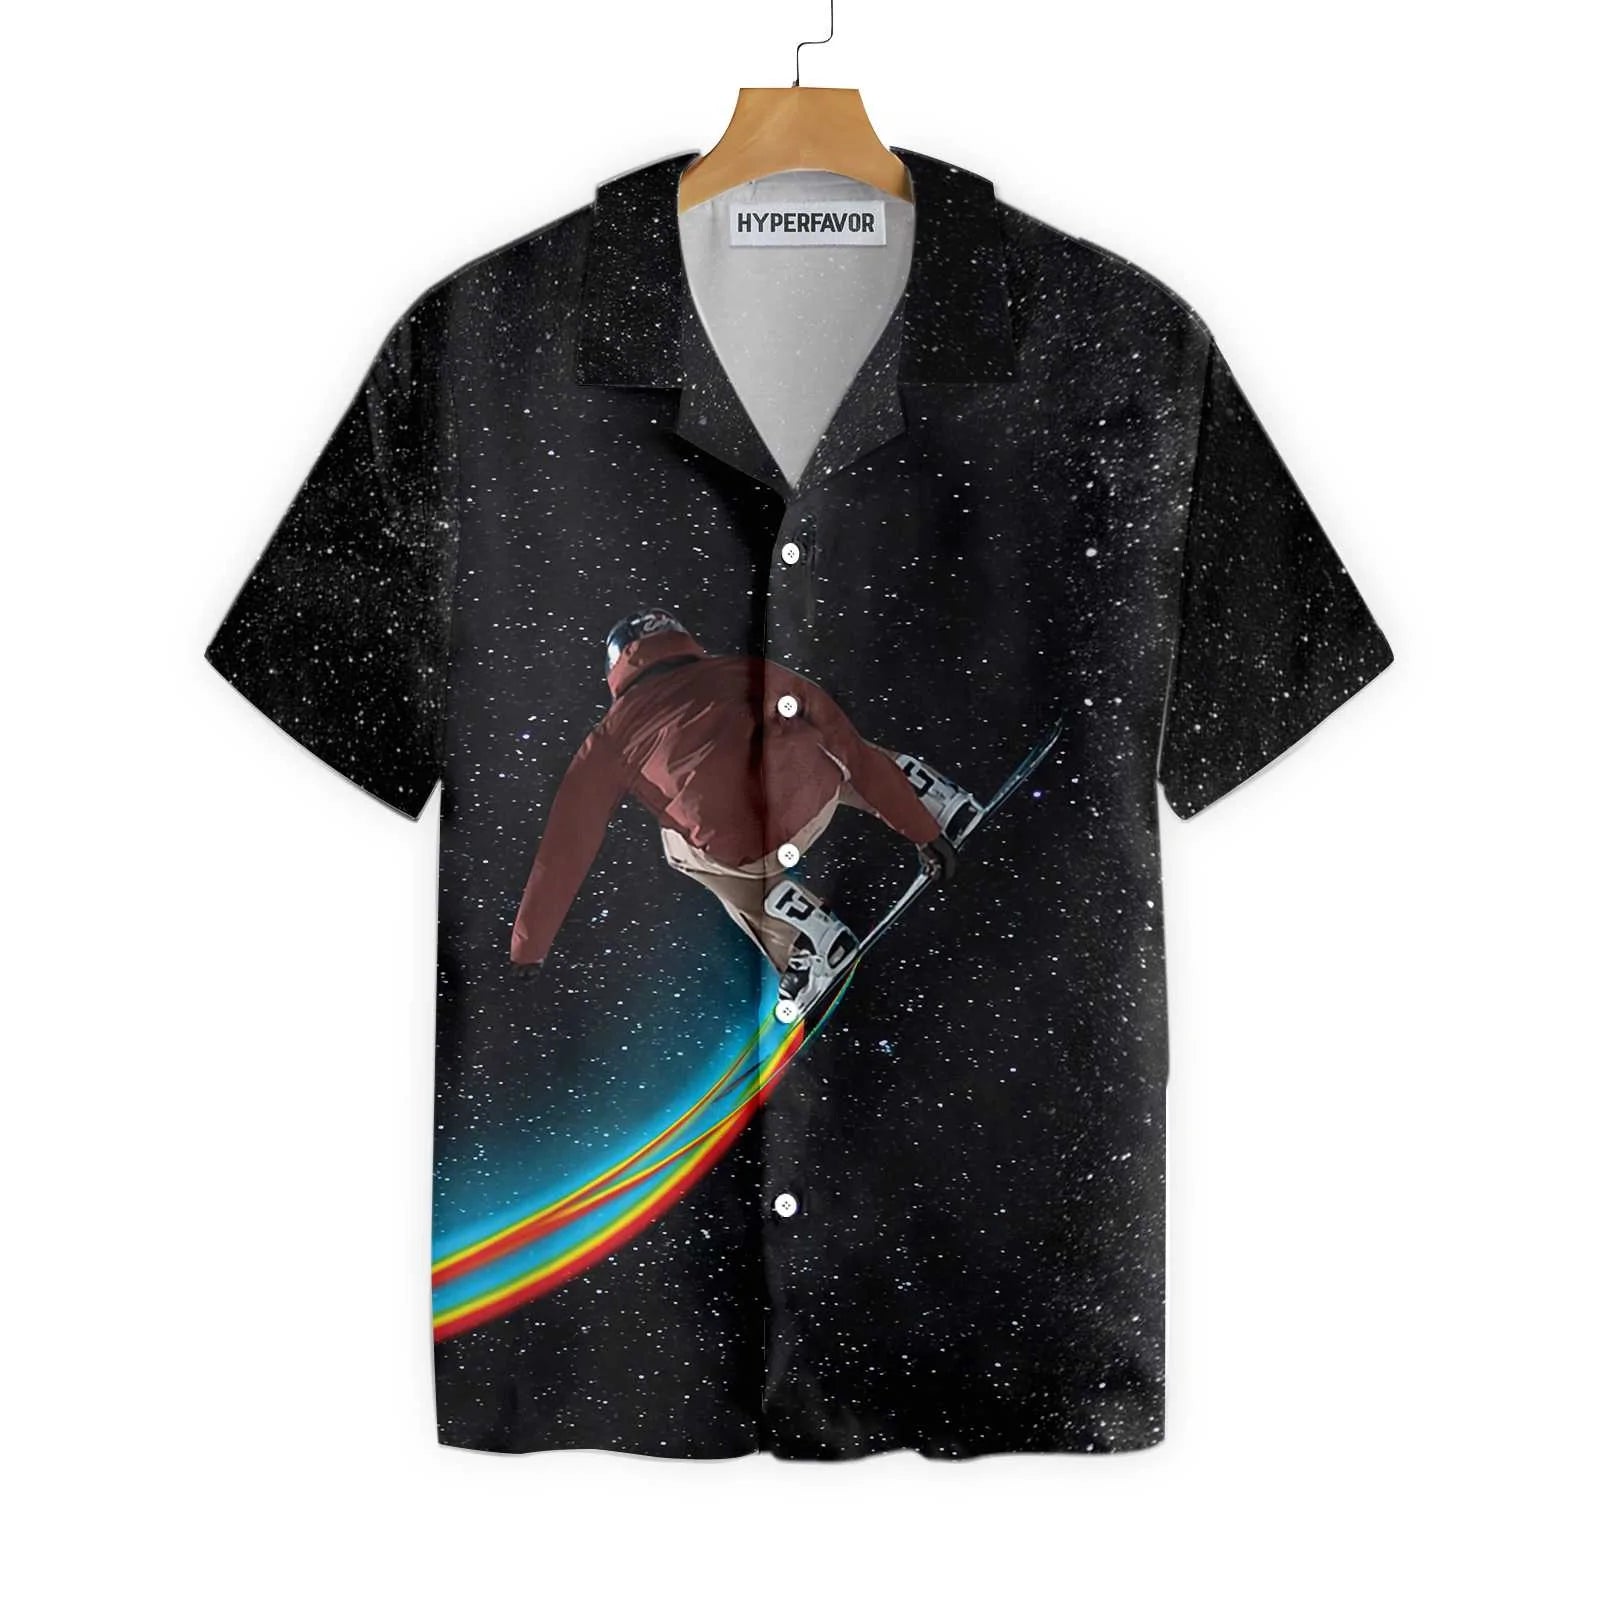 3D The Sky Hawaiian Shirt, Aloha Shirt For Men - Perfect Gift For Fishing Lovers, Friends, Husband, Boyfriend, Family